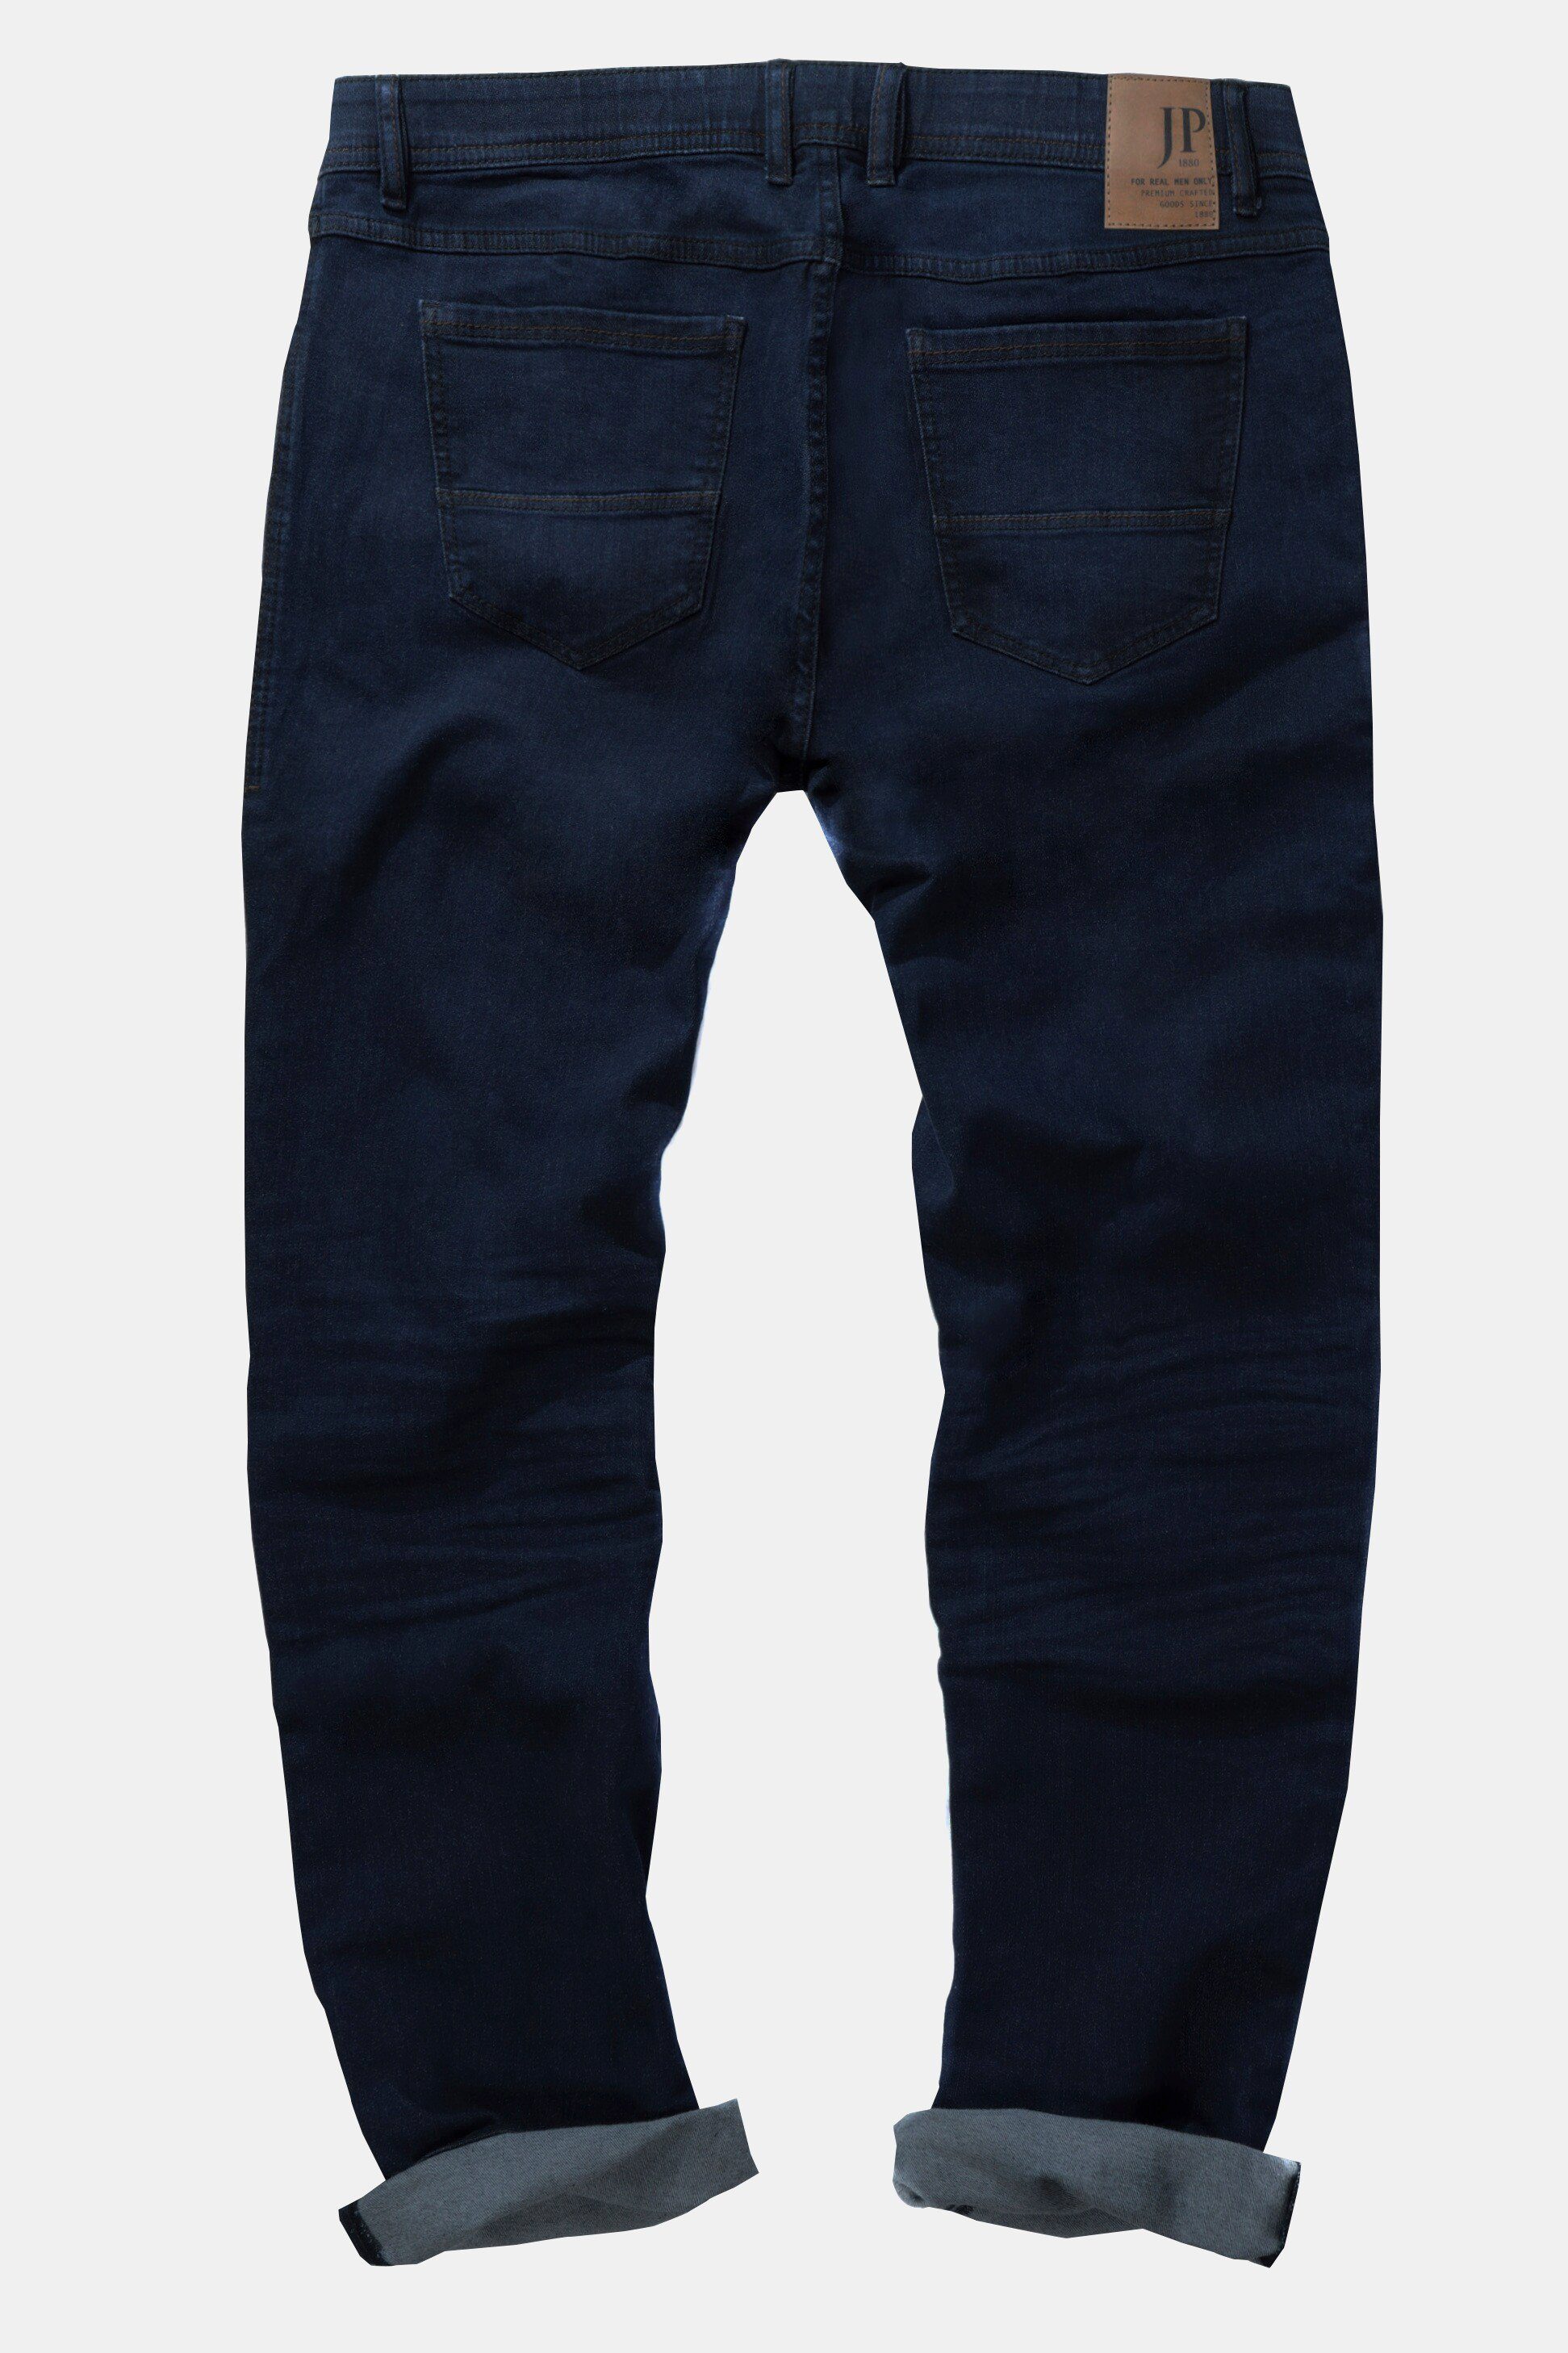 JP1880 Cargohose Jeans Bauchfit dark Gr. denim Denim bis blue 70/35